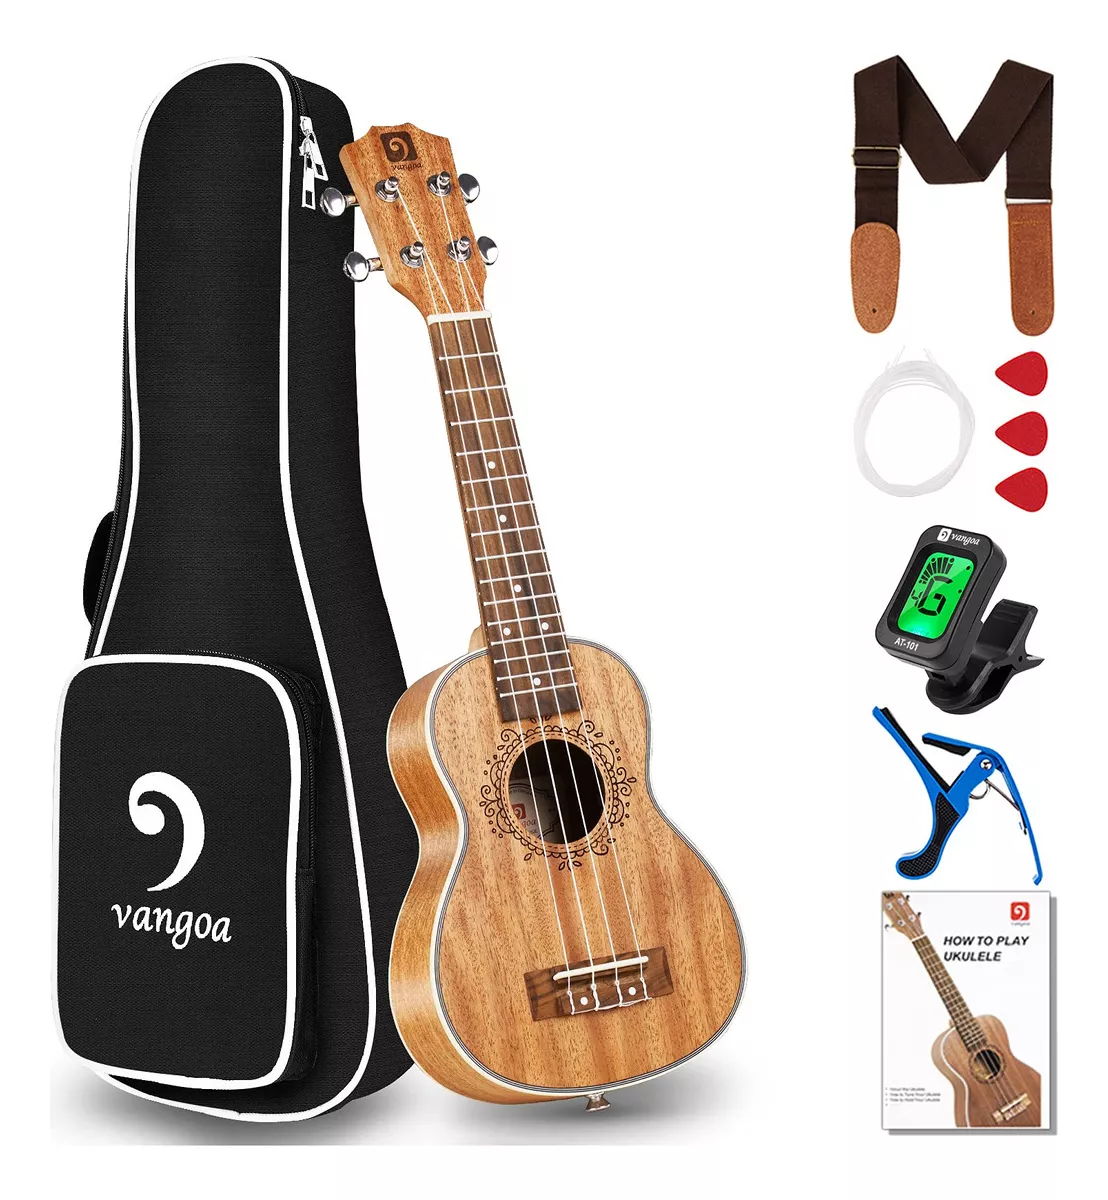 Segunda imagen para búsqueda de ukulele tenor